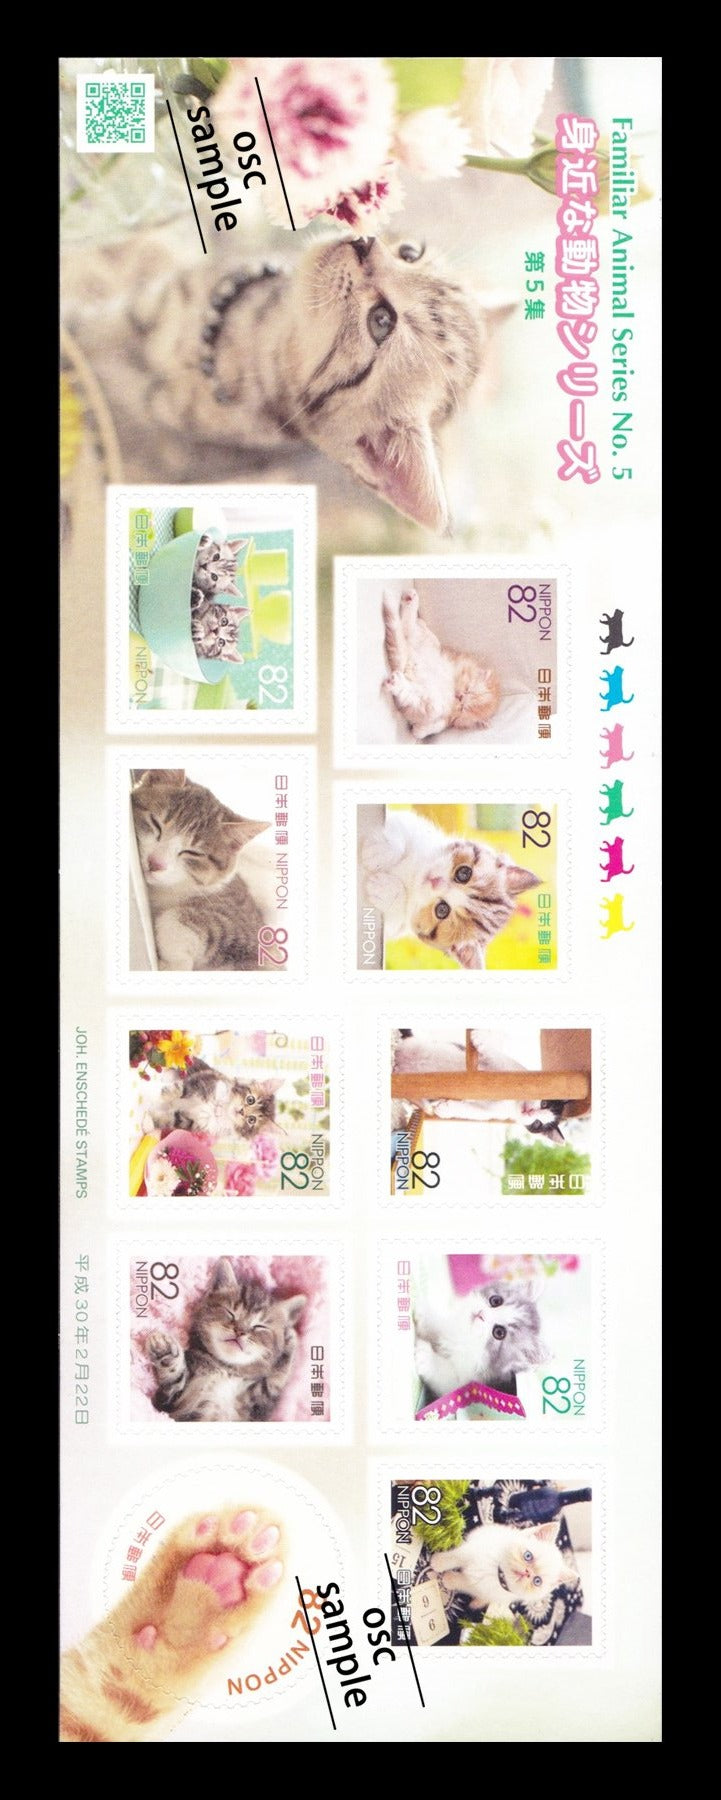 Familiar Animal Series Vol.5 (Cat Ver. / 82 yen)